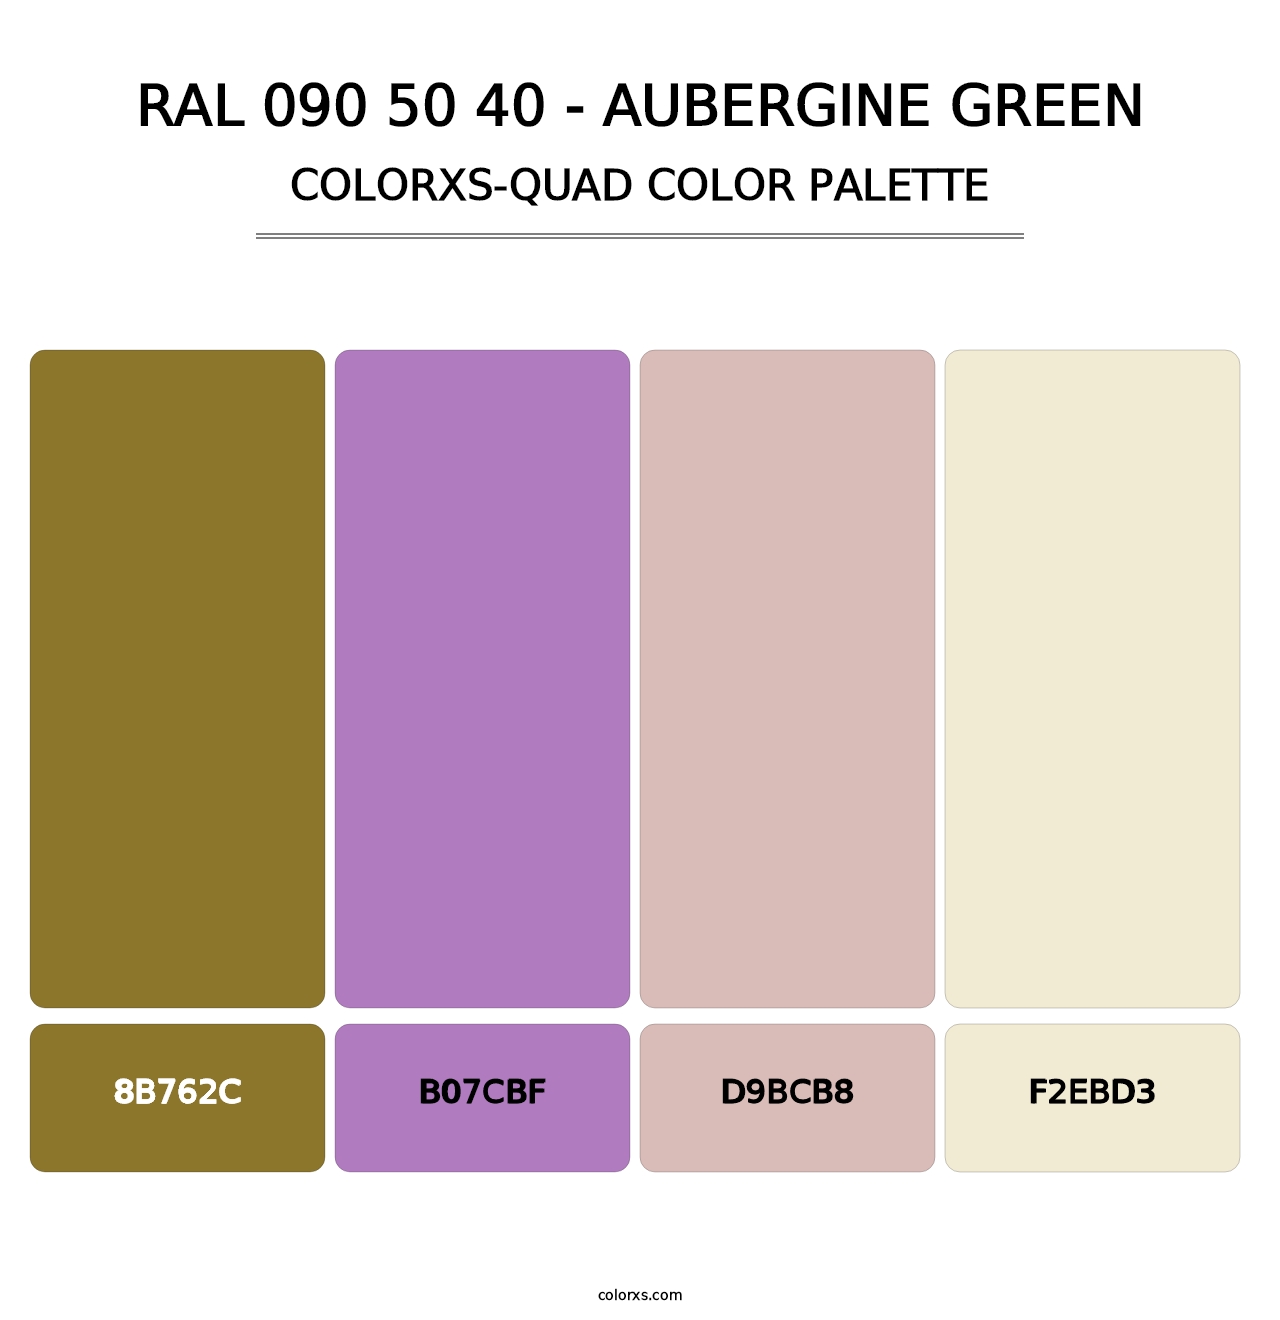 RAL 090 50 40 - Aubergine Green - Colorxs Quad Palette